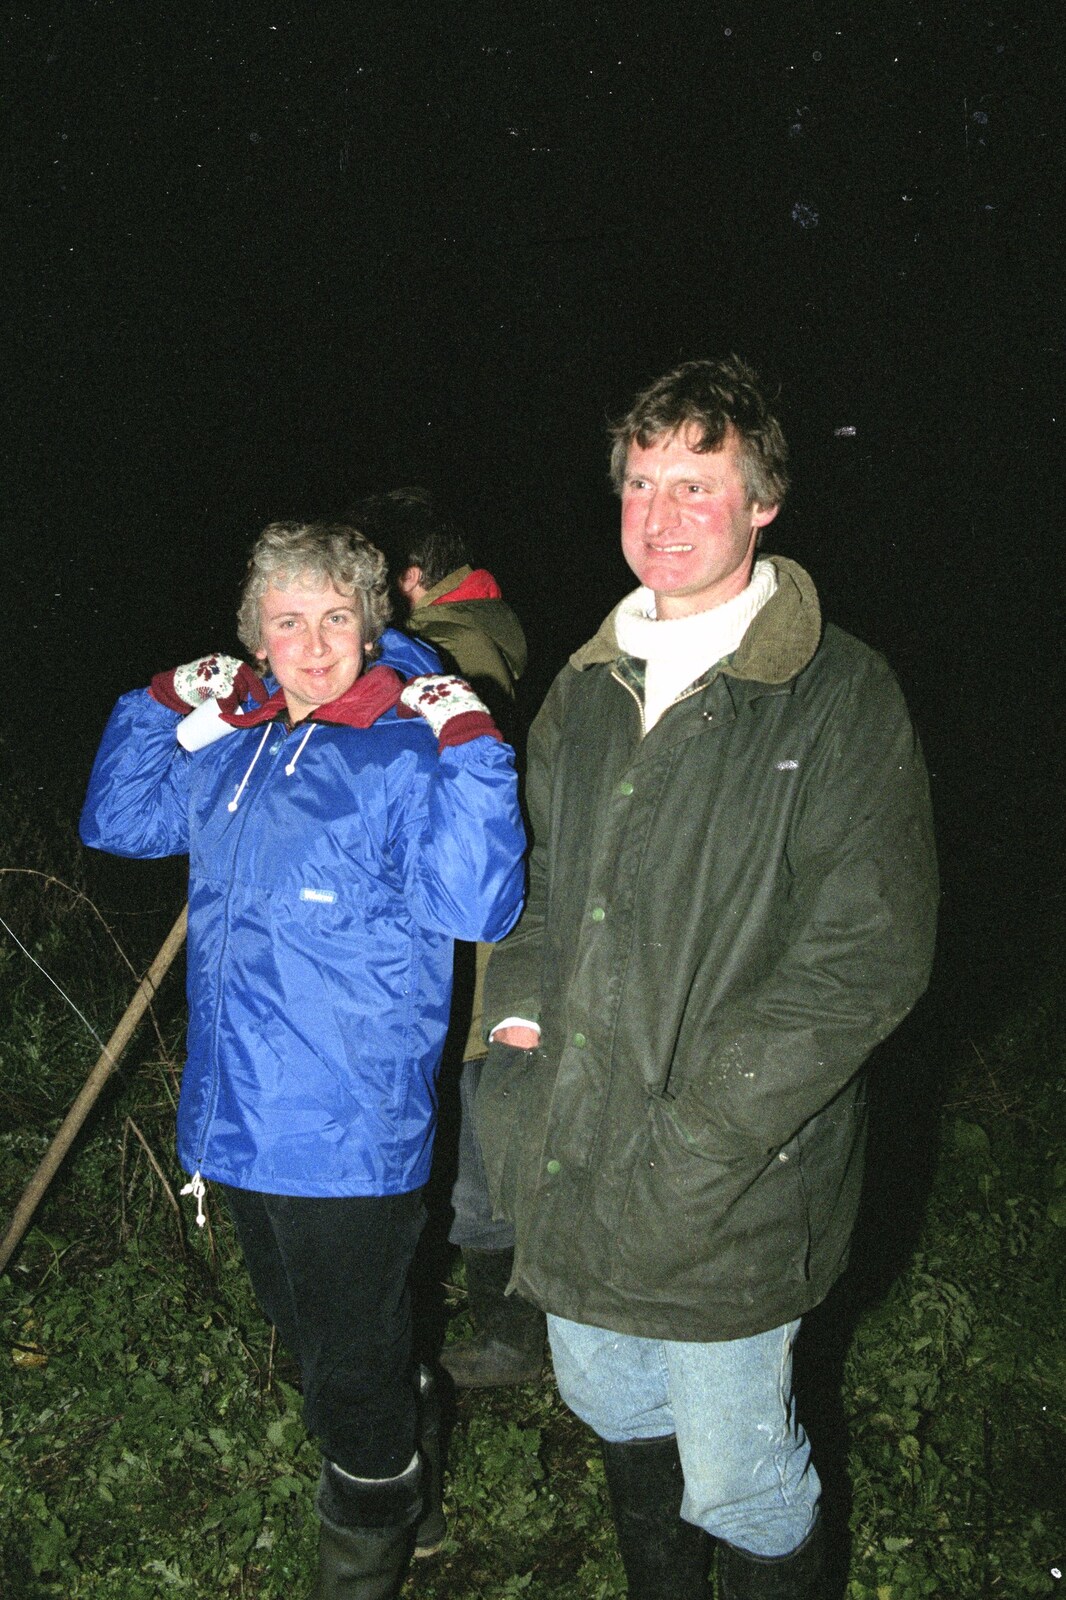 Linda and Geoff from Bonfire Night, Stuston, Suffolk - 5th November 1990